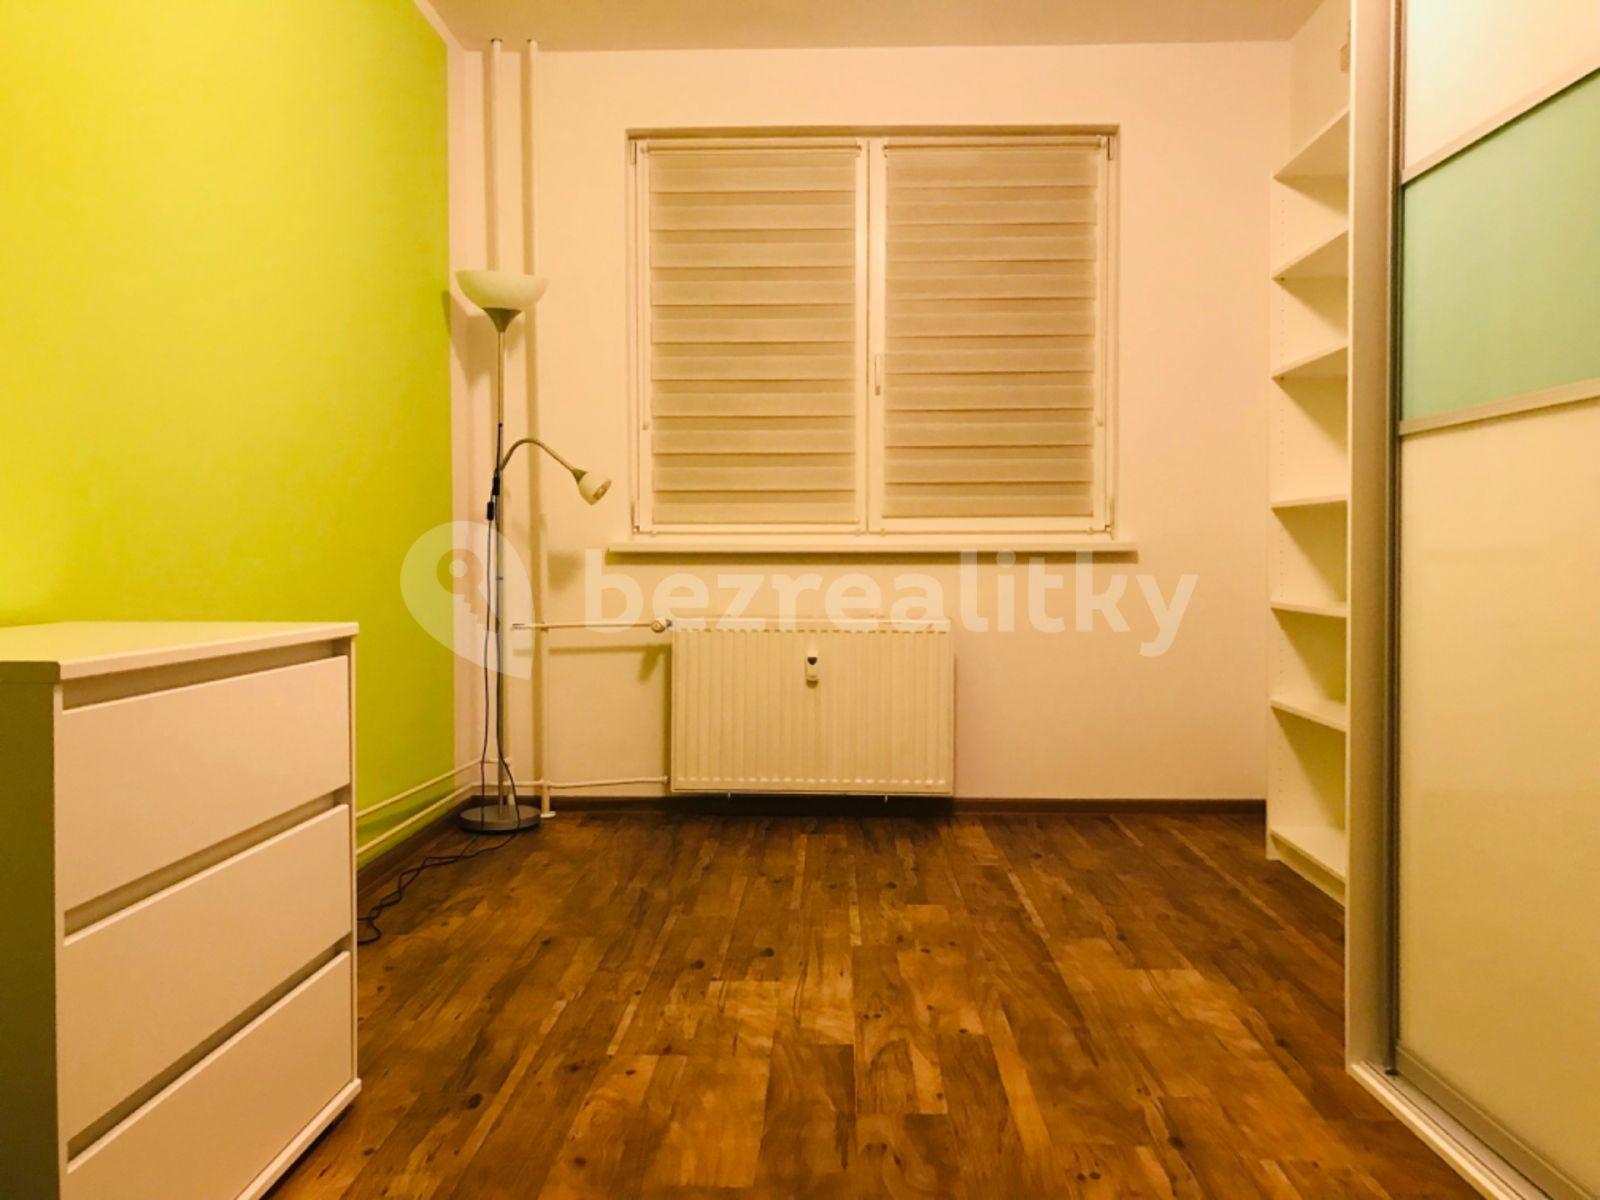 3 bedroom flat to rent, 68 m², Zikova, Olomouc, Olomoucký Region